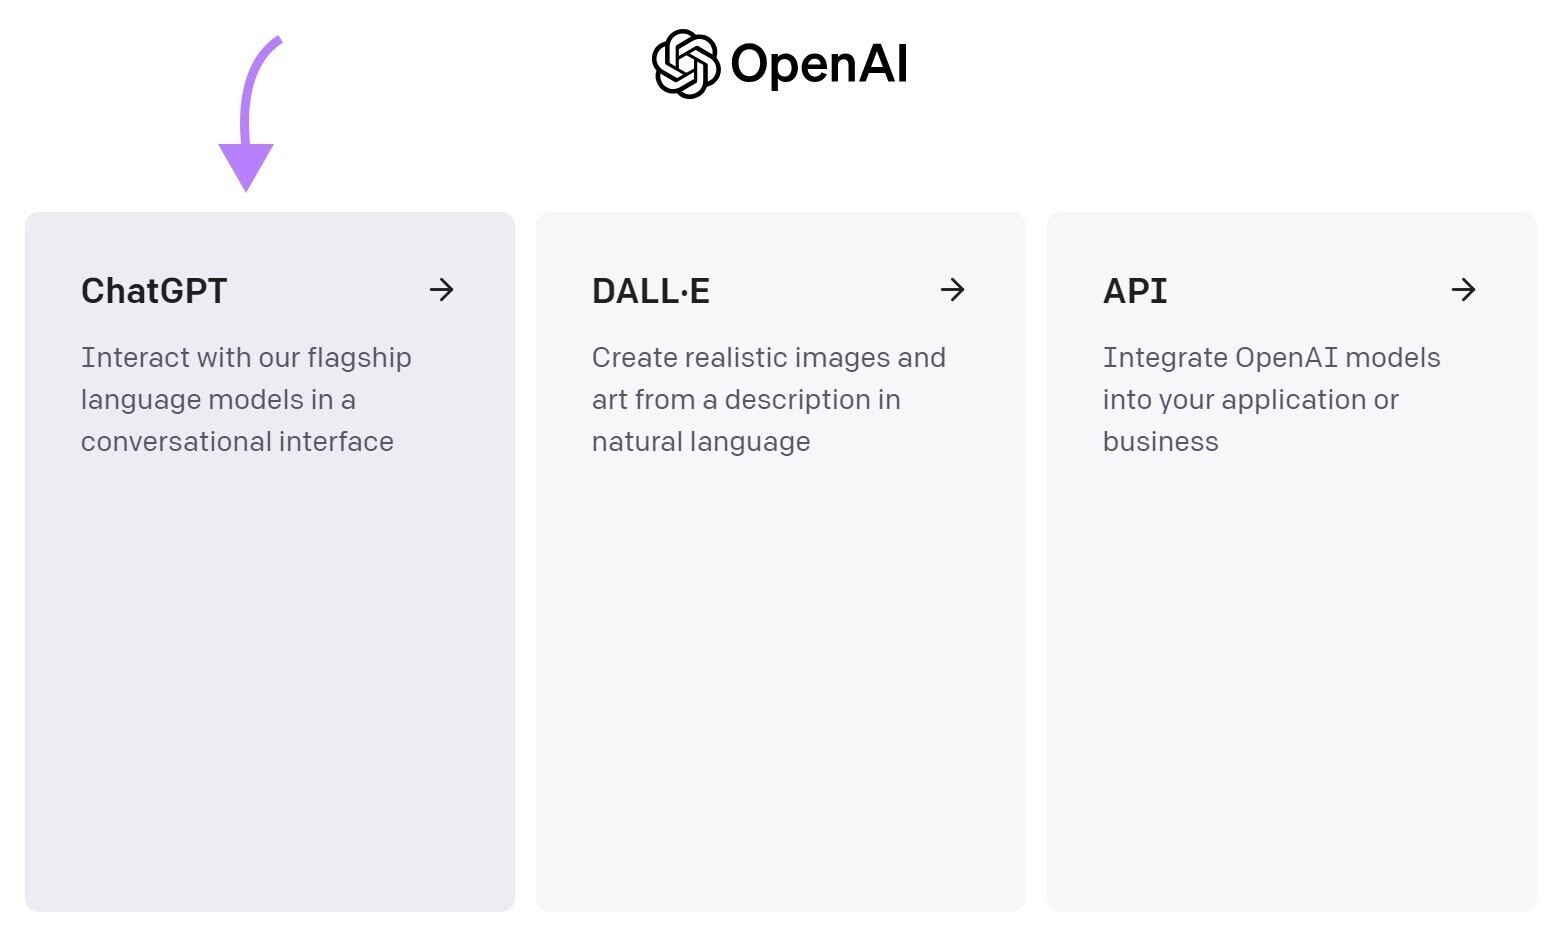 Platform options screen from OpenAI